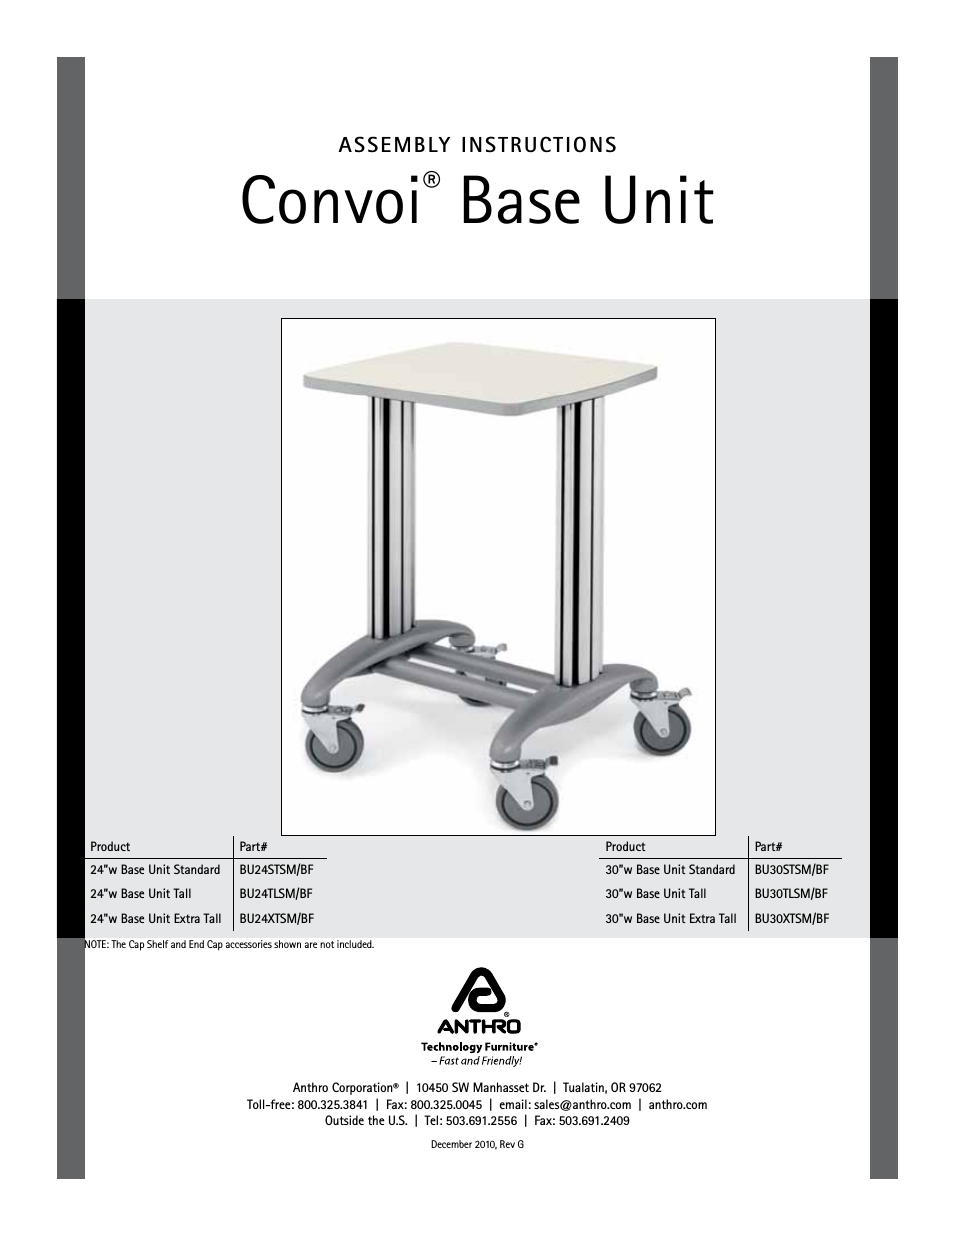 Convoi Base Unit Assembly Instructions